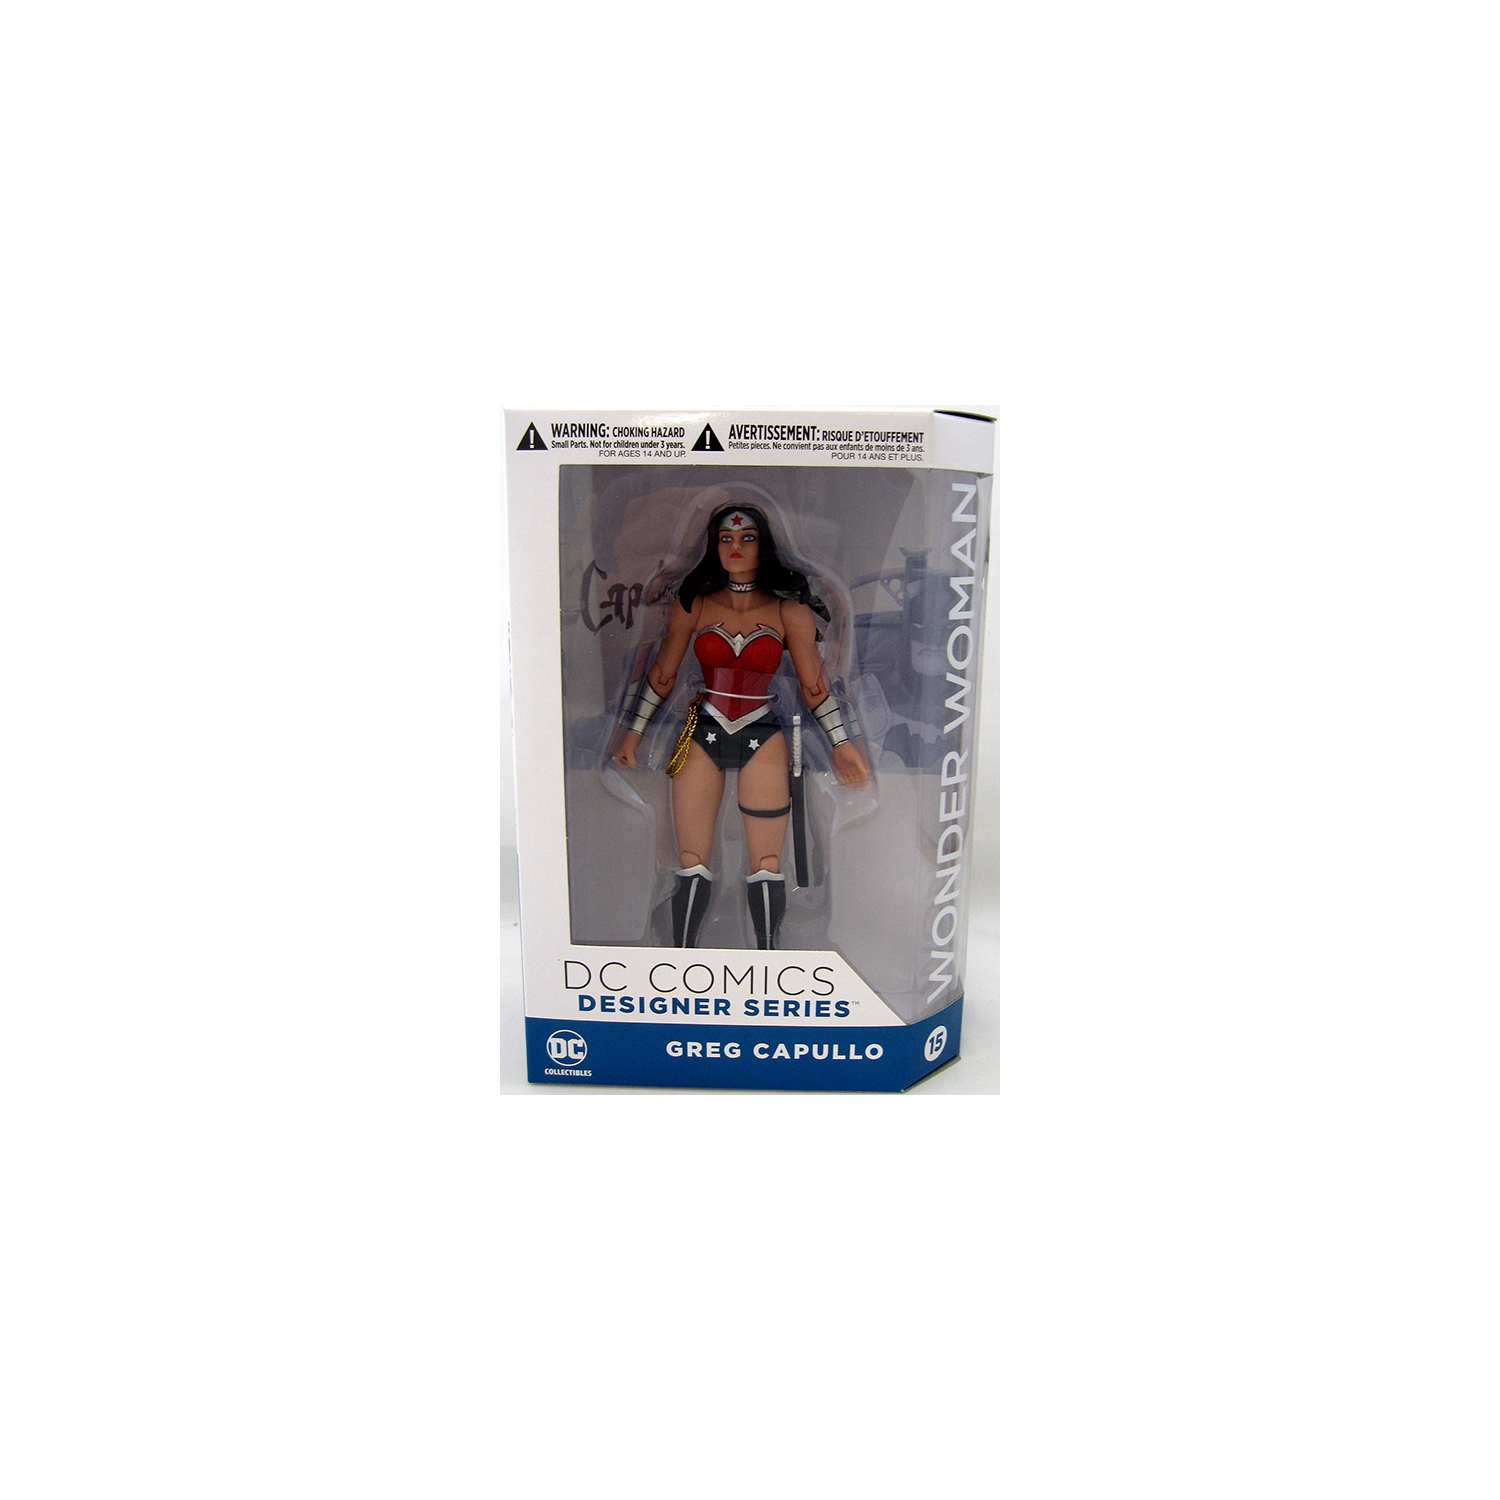 DC Comics Designer Series 6 Inch Action Figure Greg Capullo Series - Wonder Woman